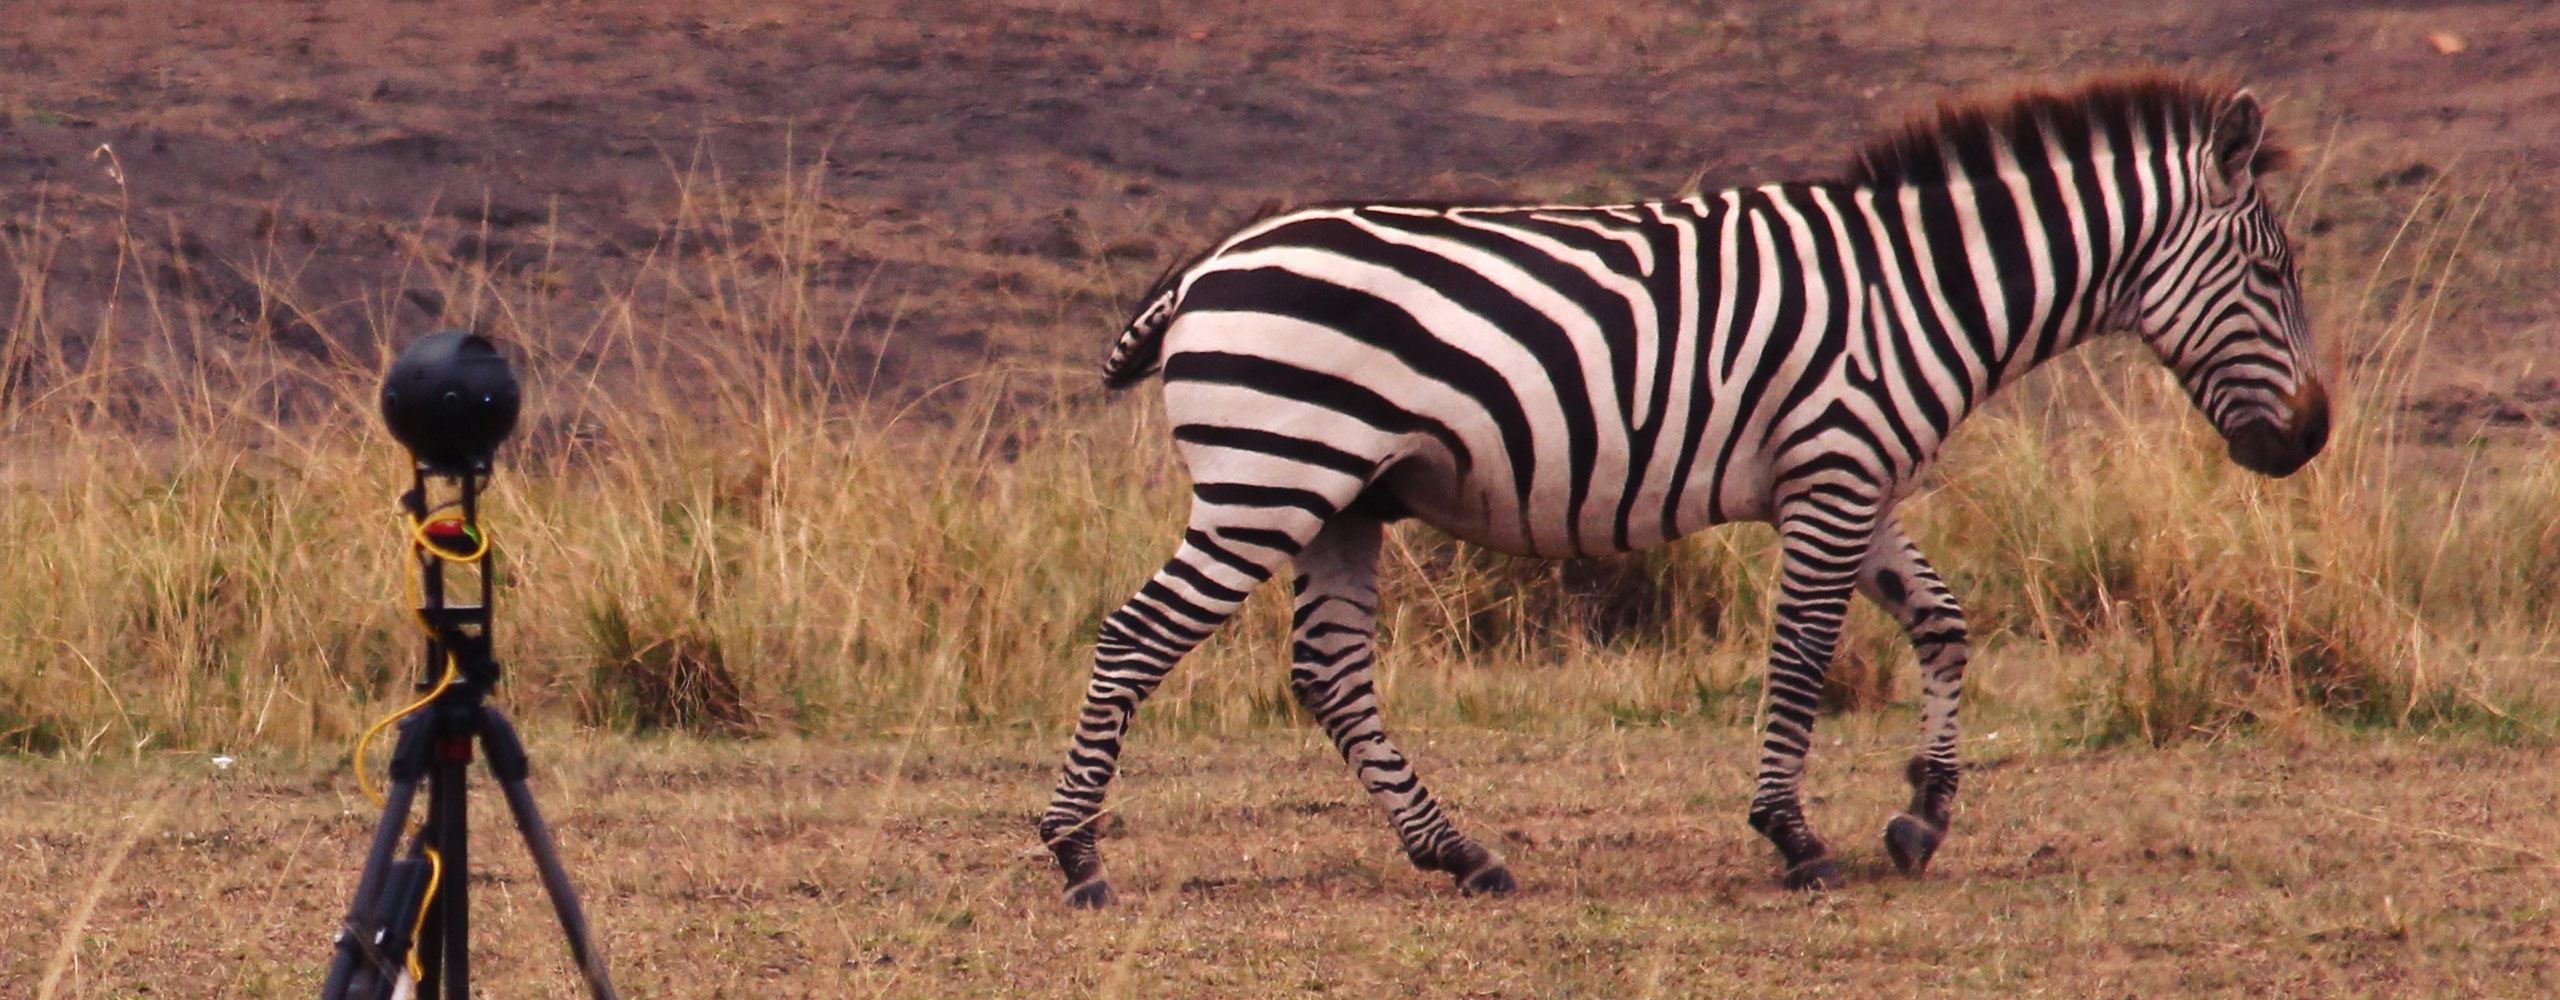 360 Camera with Zebra Walking By